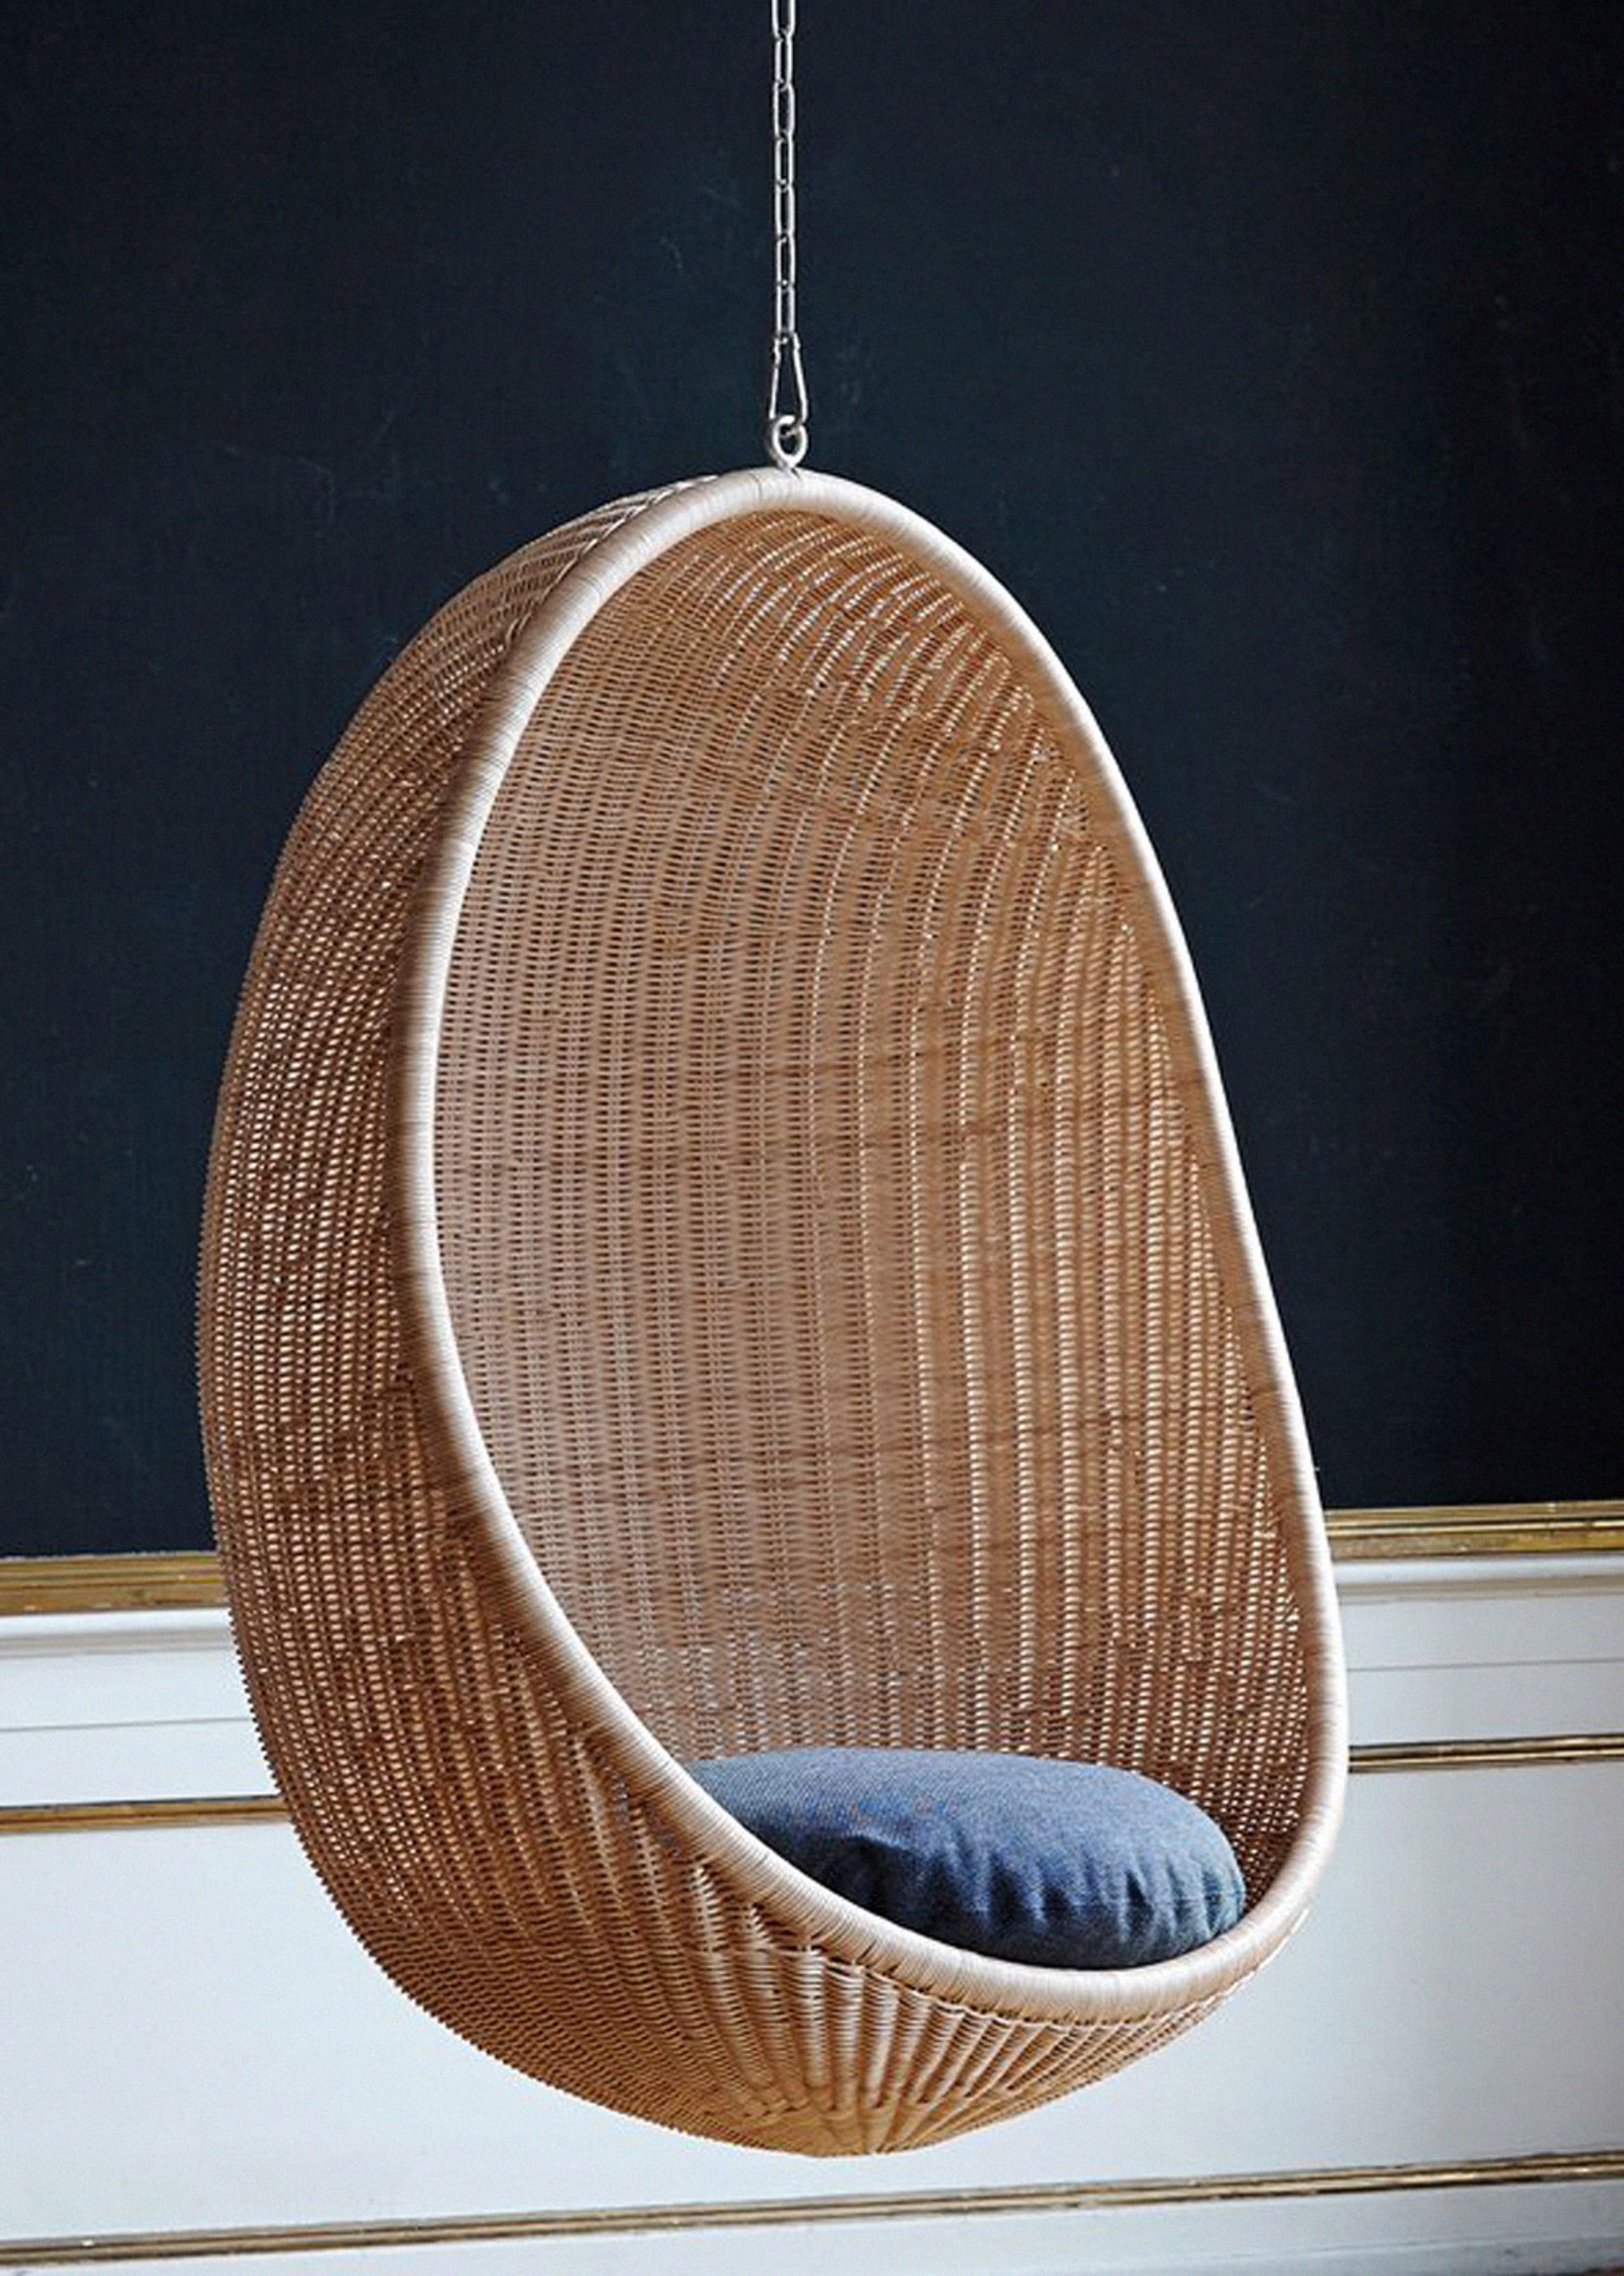 arash® Chaise suspendue - Egg chair - avec cadre - Zwart- Beige